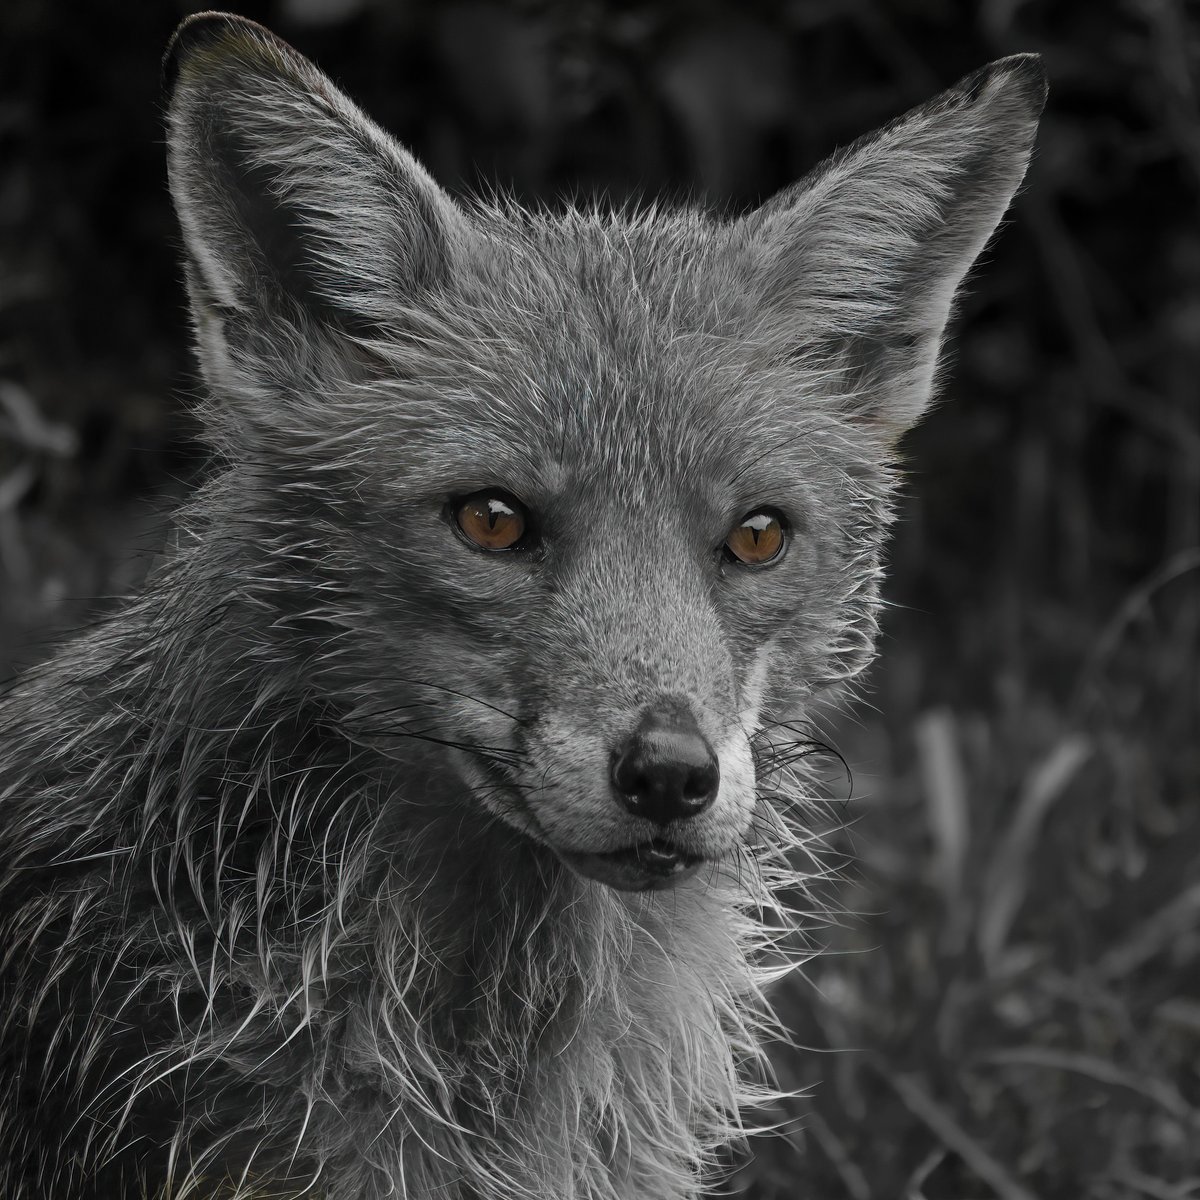 Red fox in black and white apart from those amazing eyes. #wildlifephotography #nature #TwitterNatureCommunity #ThePhotoHour #photooftheday @Natures_Voice @Team4Nature @Britishnatureguide #BBCWildlifePOTD @wildlifemag #redfox #FoxOfTheDay